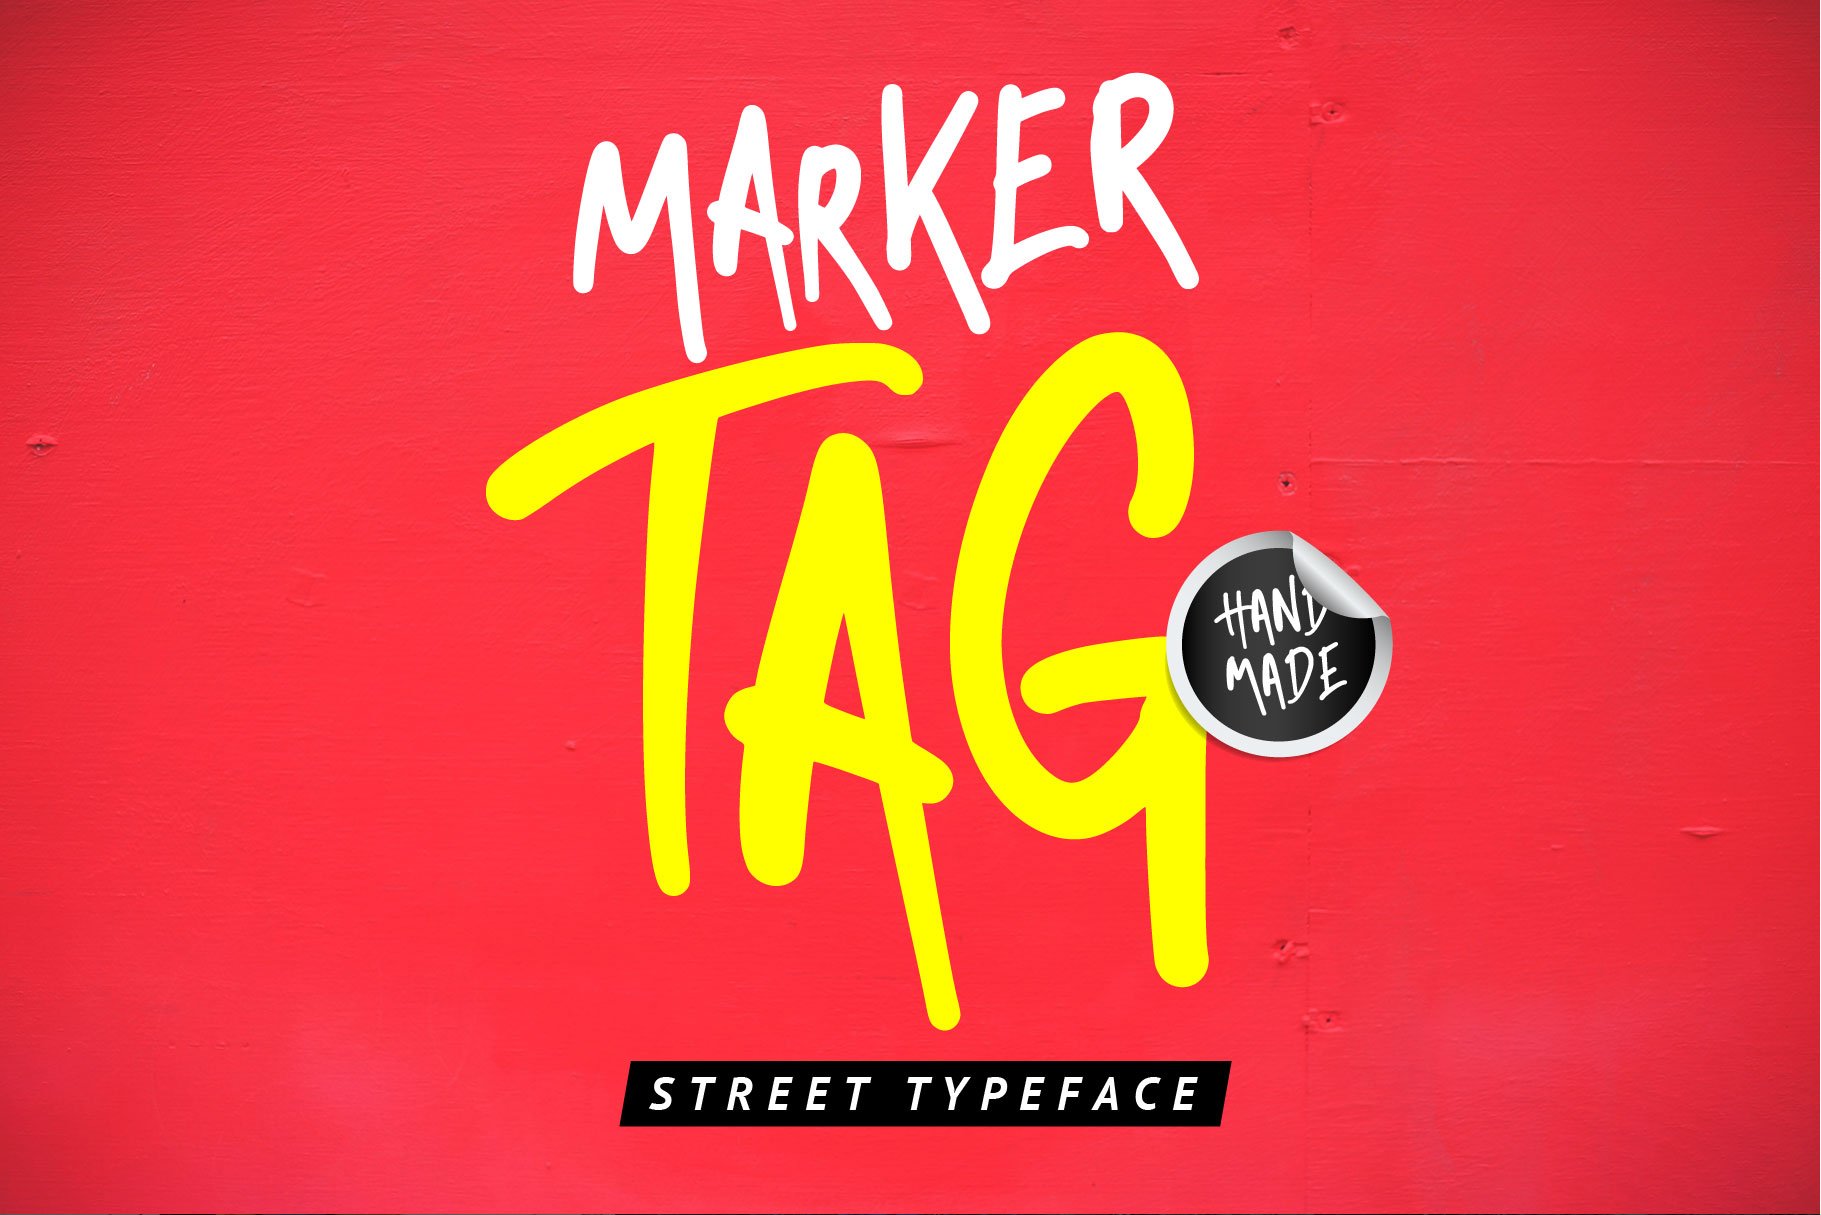 Marker Tag urban graffiti font cover image.